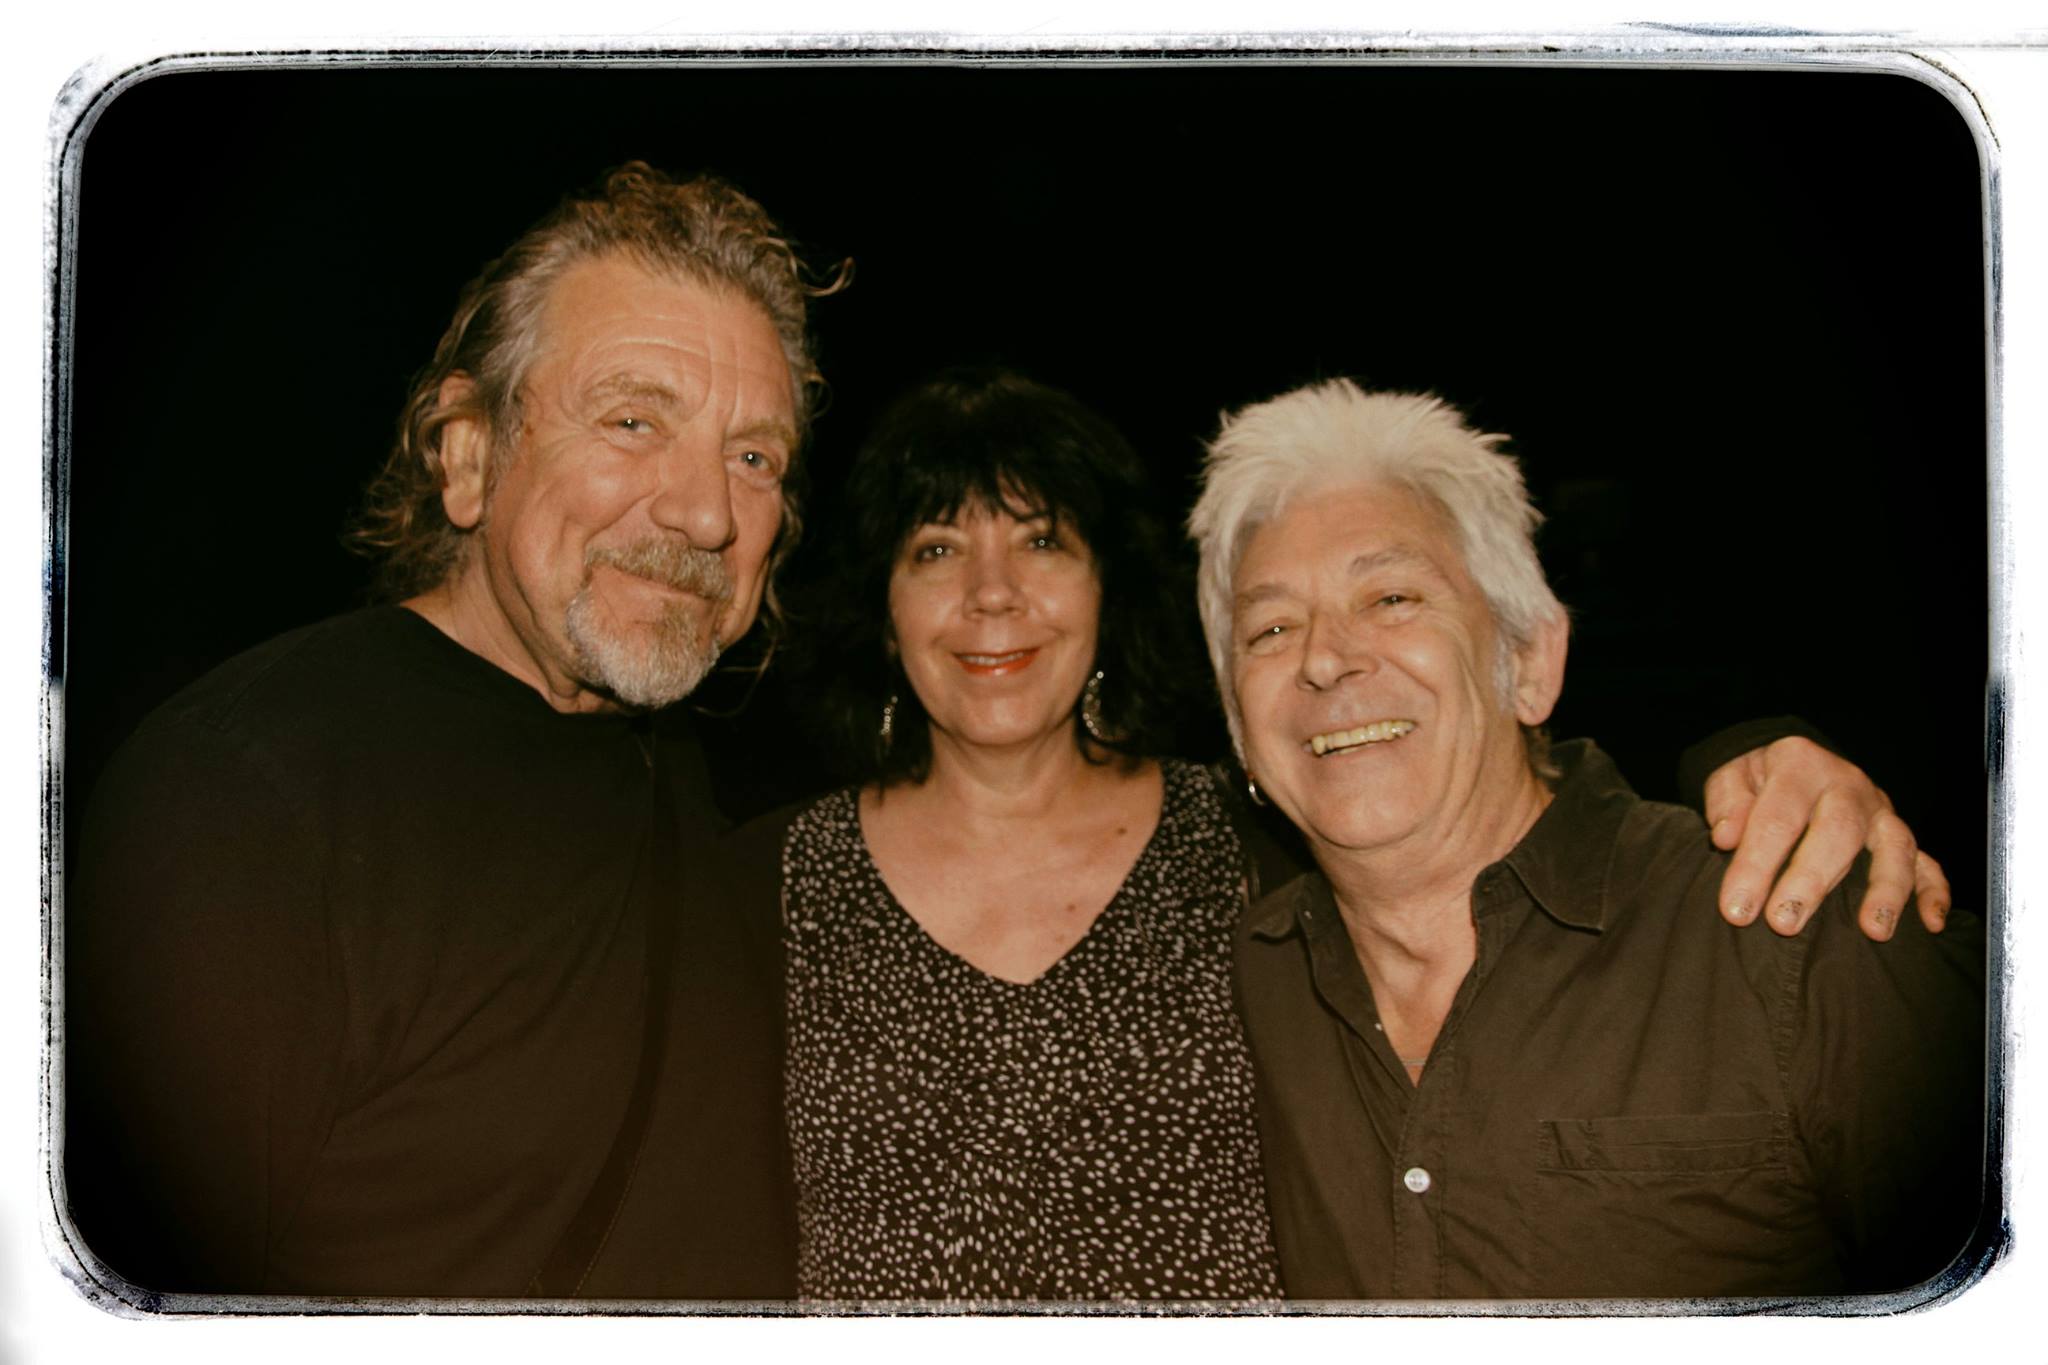 Robert Plant, me, and Mac at Stubbs